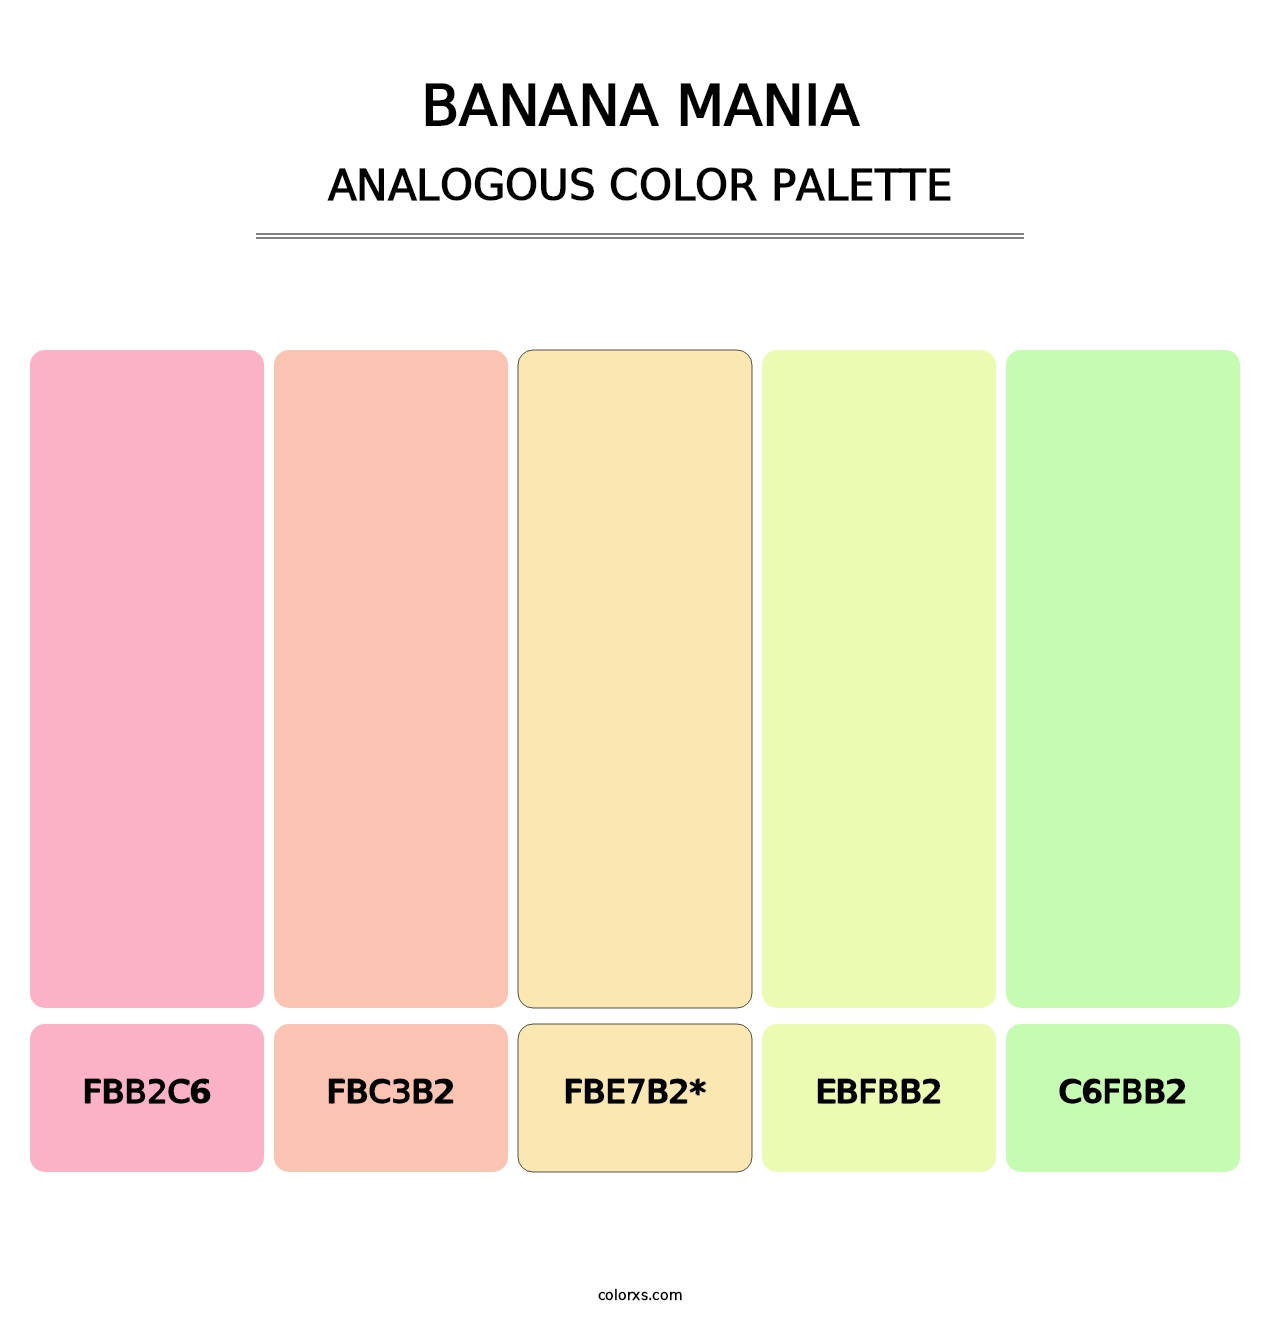 Banana Mania - Analogous Color Palette